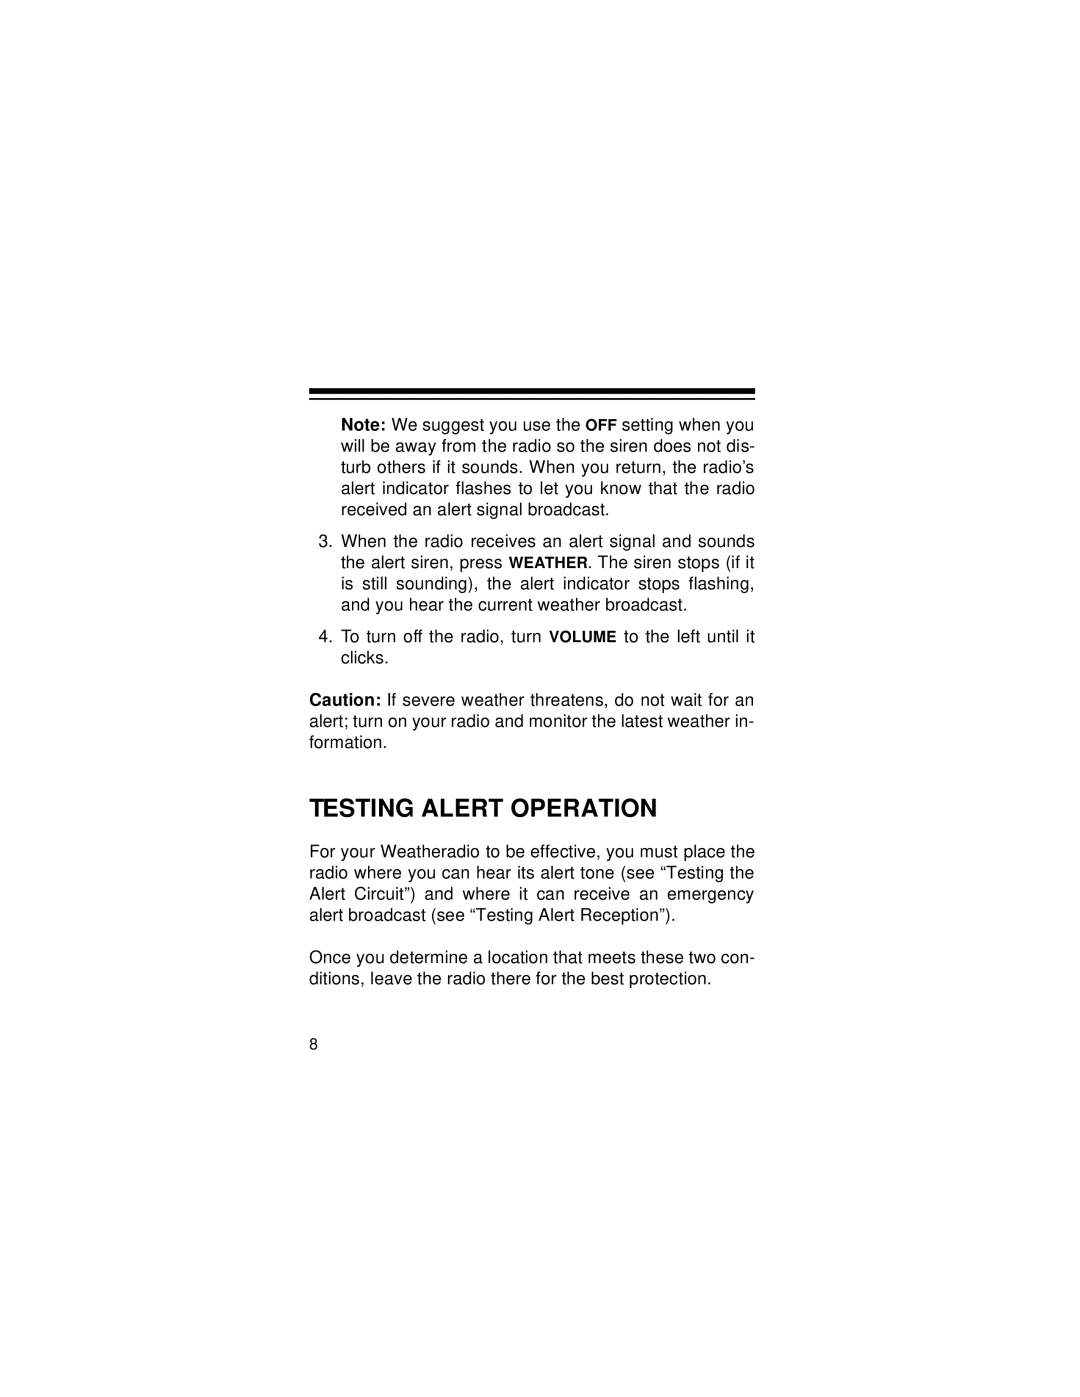 Radio Shack 12-240 owner manual Testing Alert Operation 